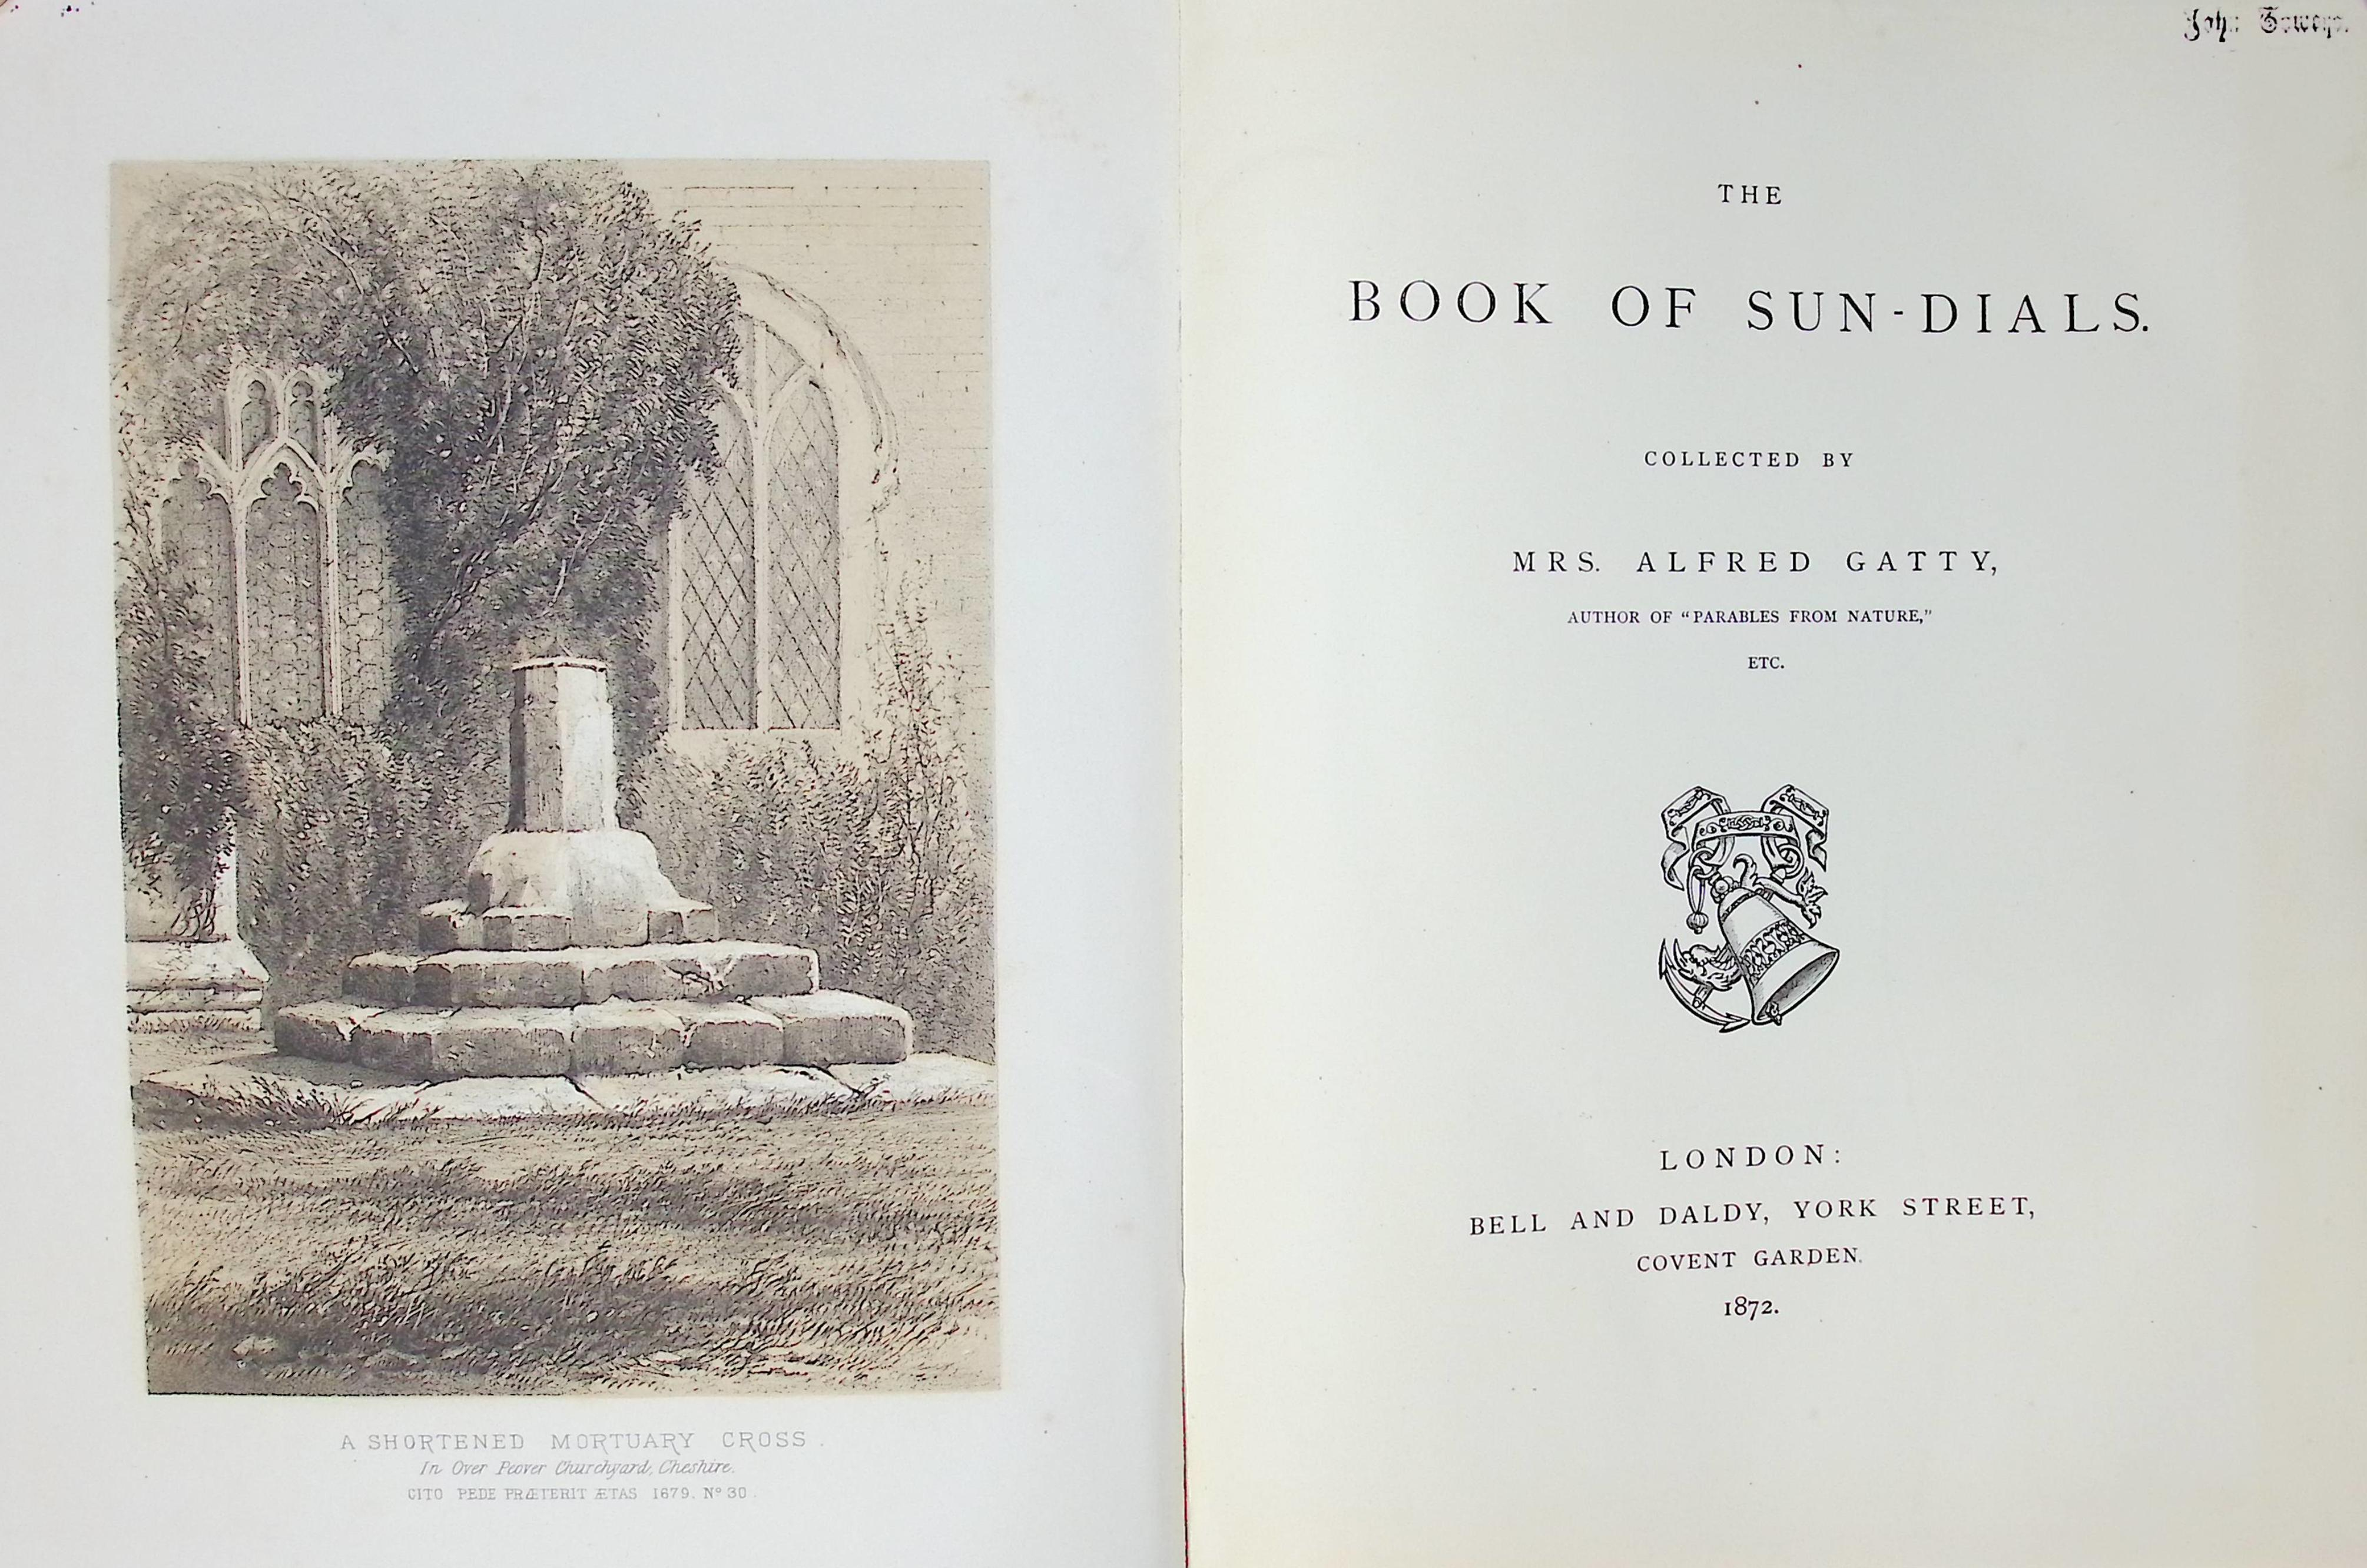 The Book of Sun-Dials